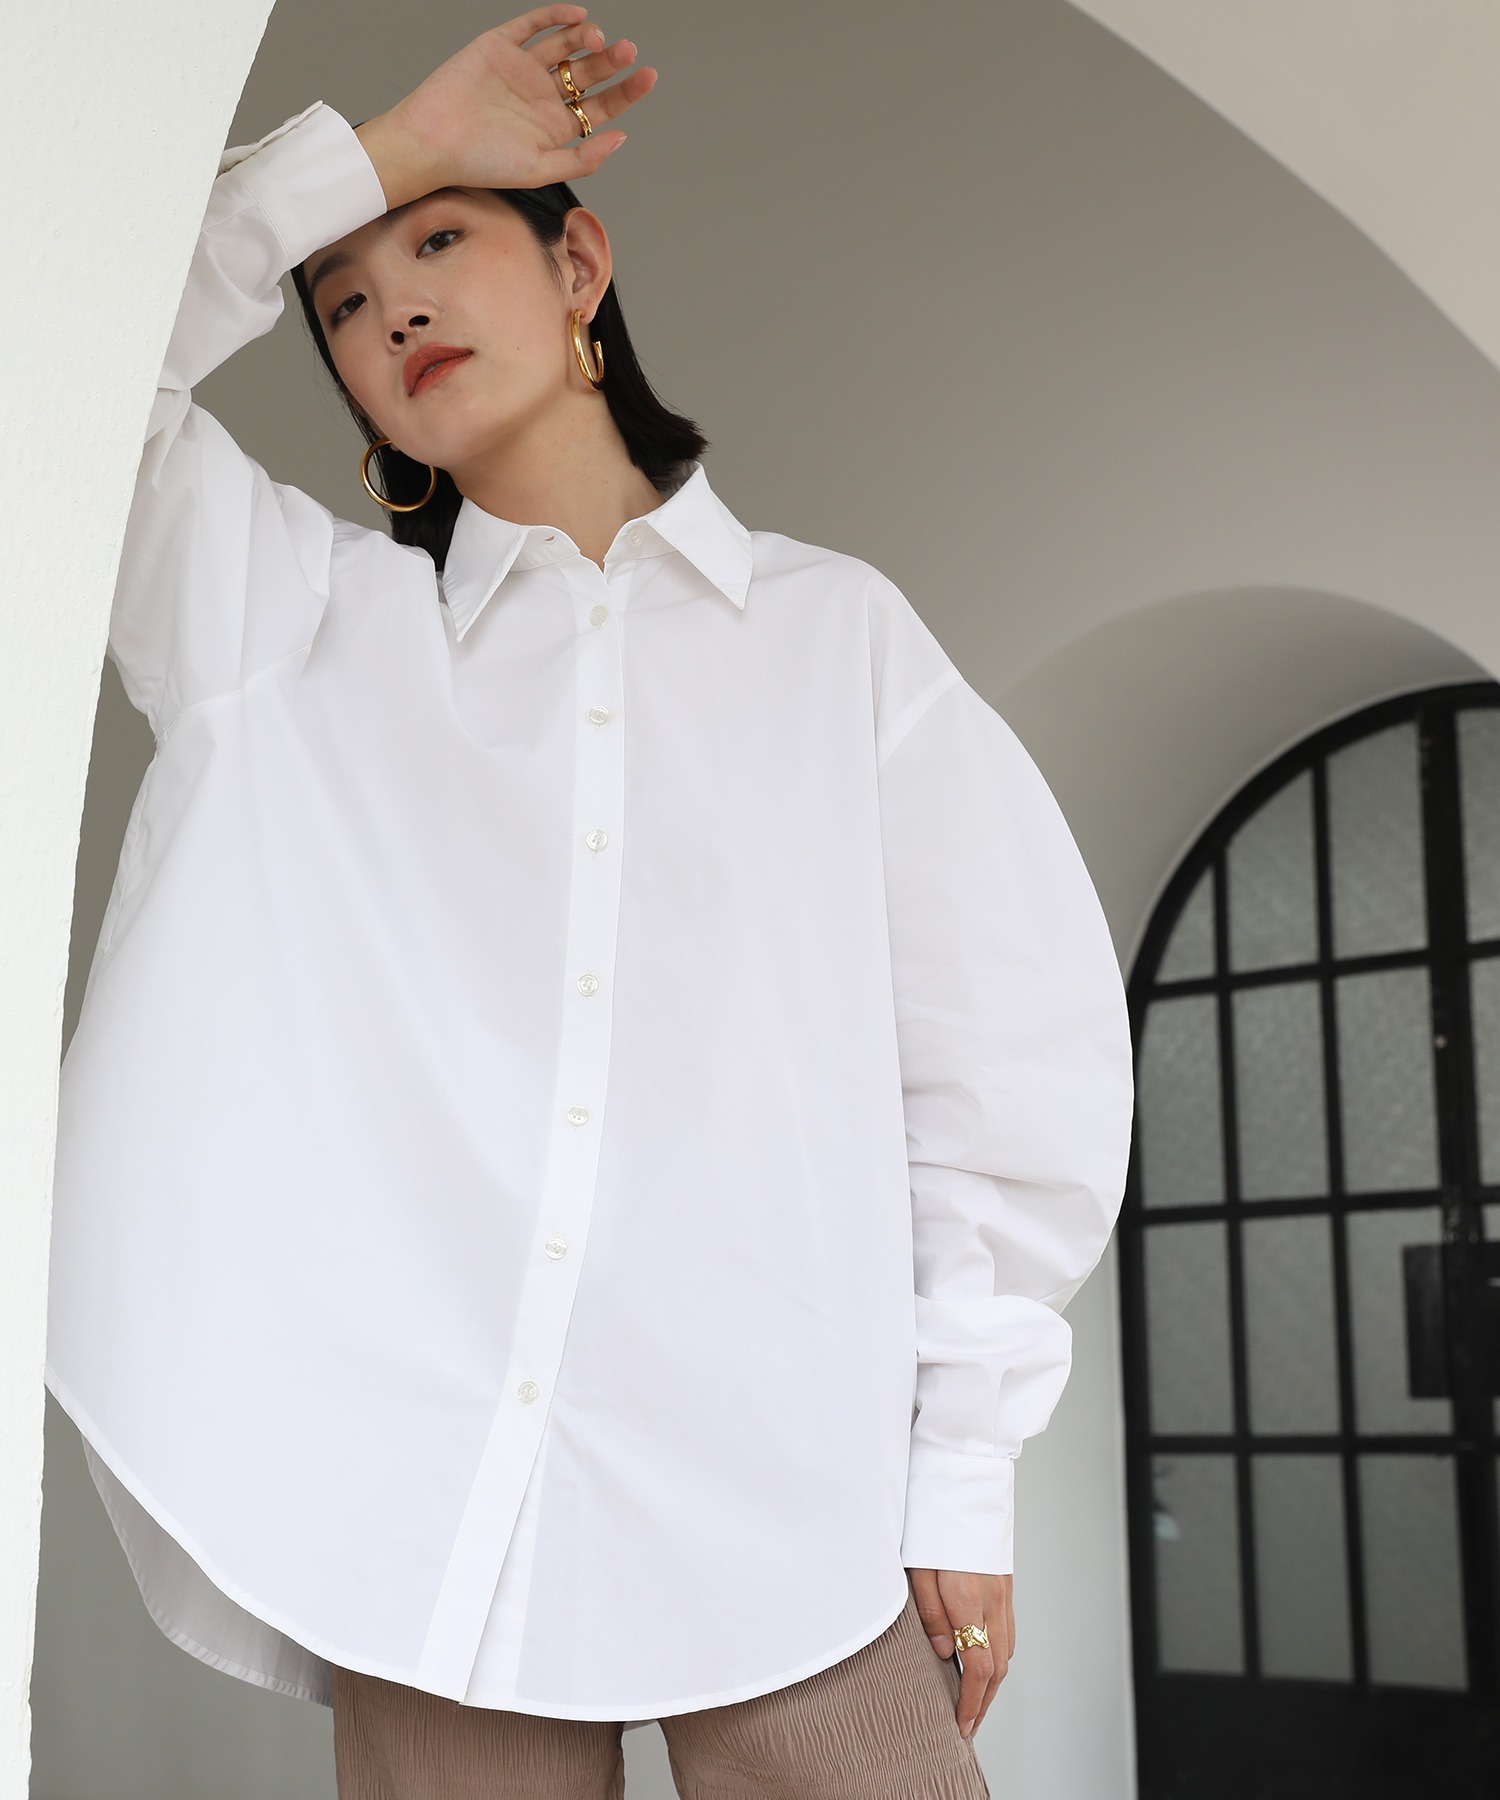 chuclla】【2021/SS】Curve sleeve shirt sb-5 chwg1-ファッション通販 